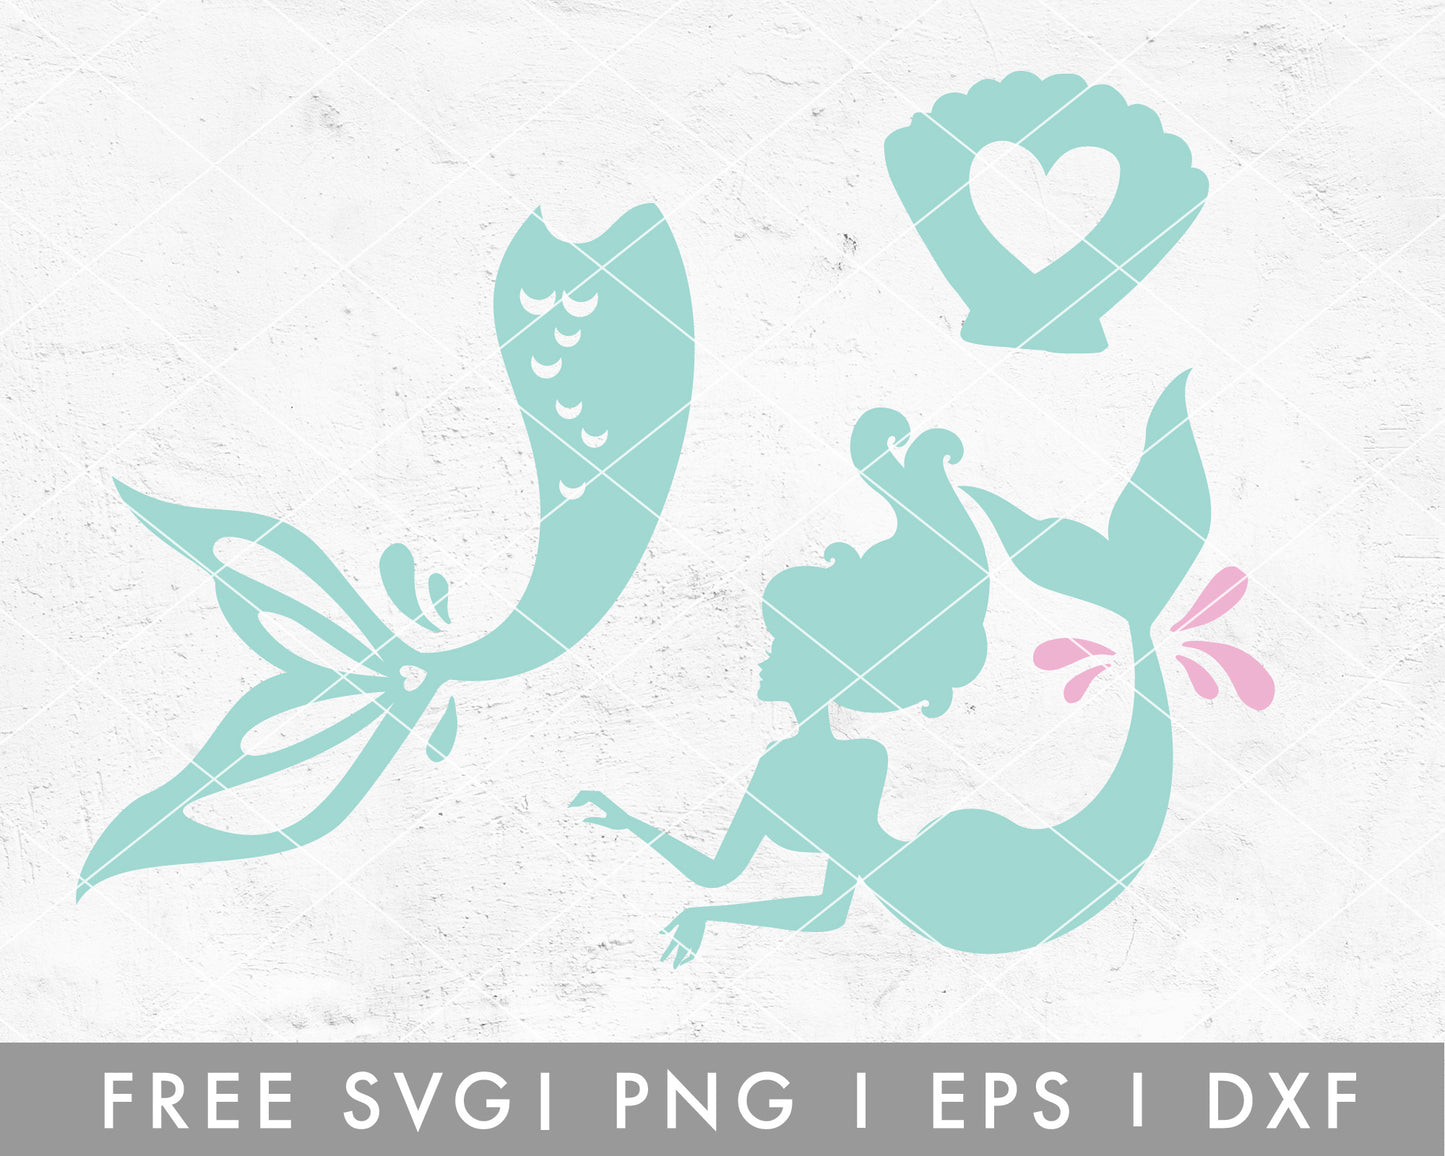 FREE FREE Mermaid SVG | Mermaid Tail SVG Cut File for Cricut, Cameo Silhouette | Free SVG Cut File